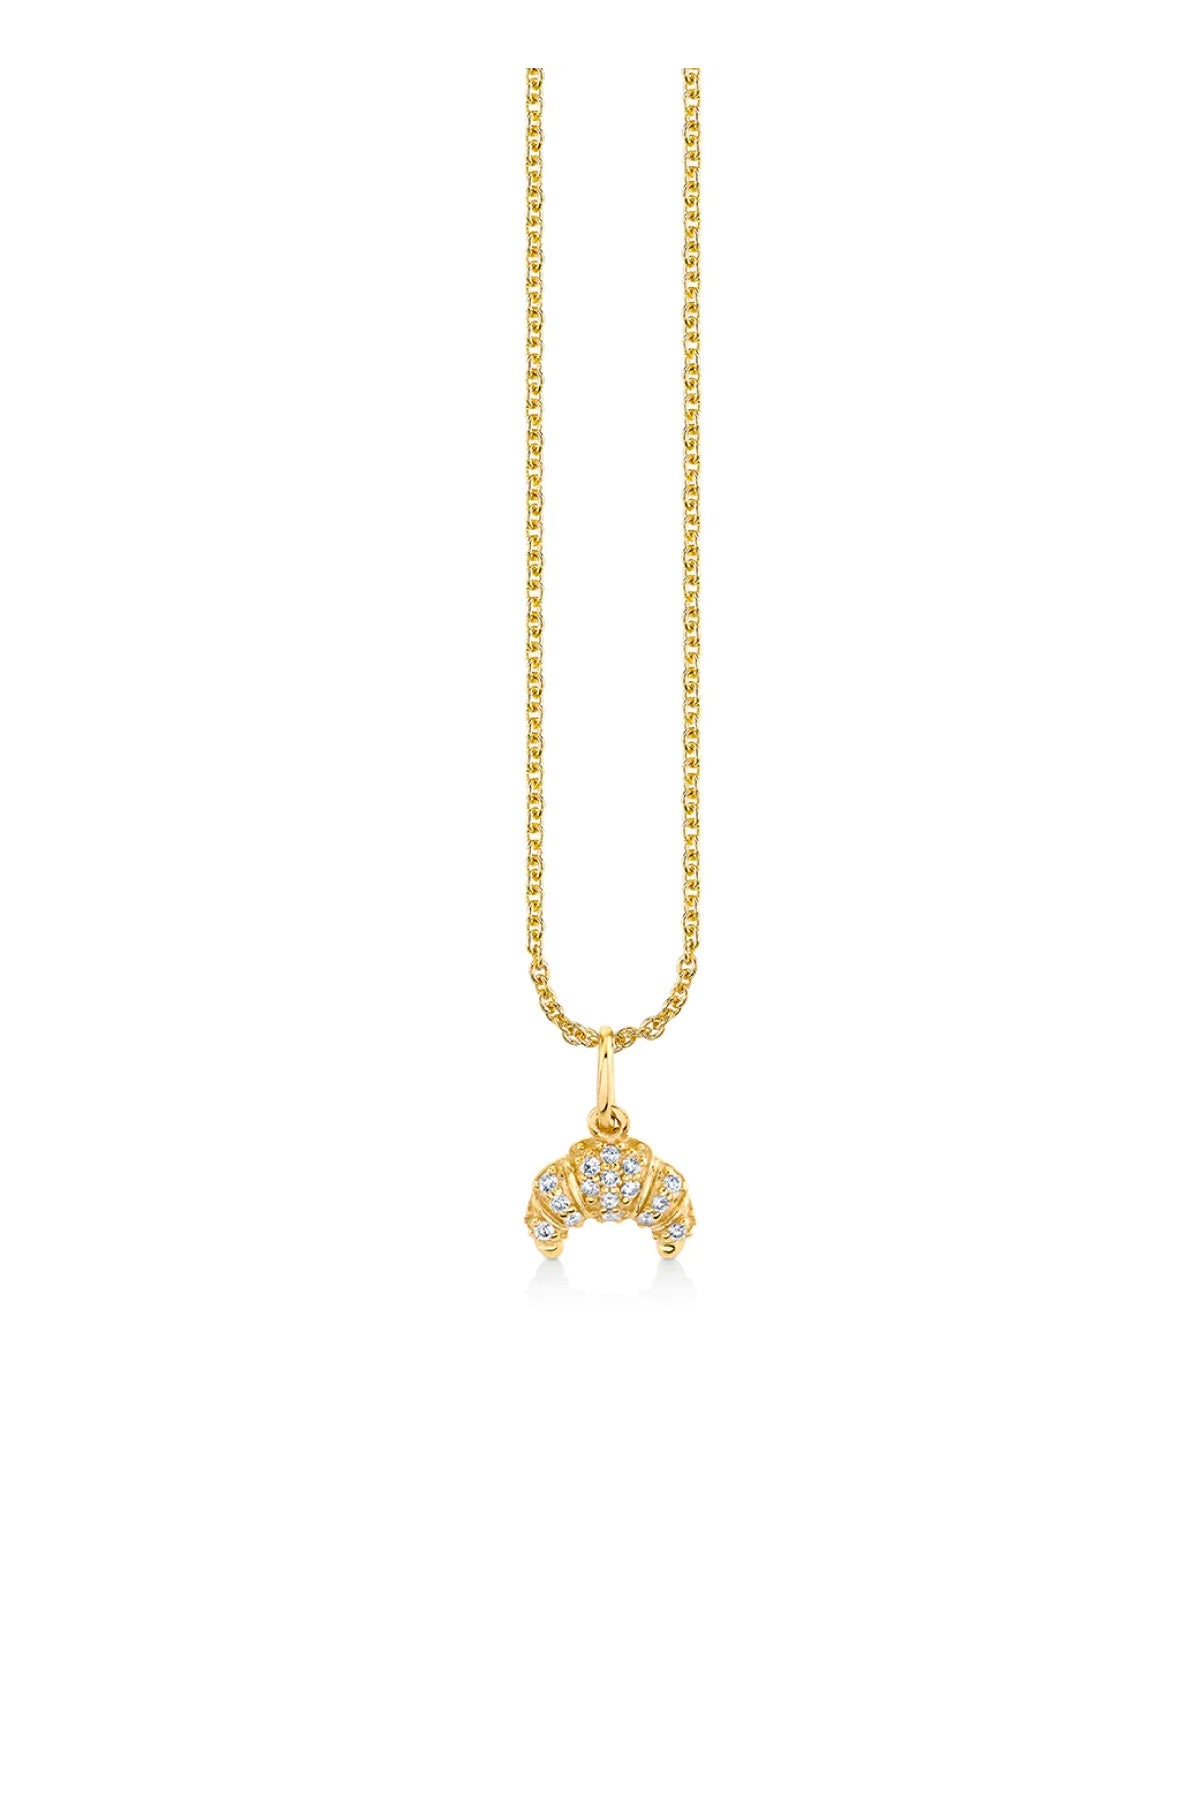 Sydney Evan Small Diamond Croissant Charm Necklace - Yellow Gold